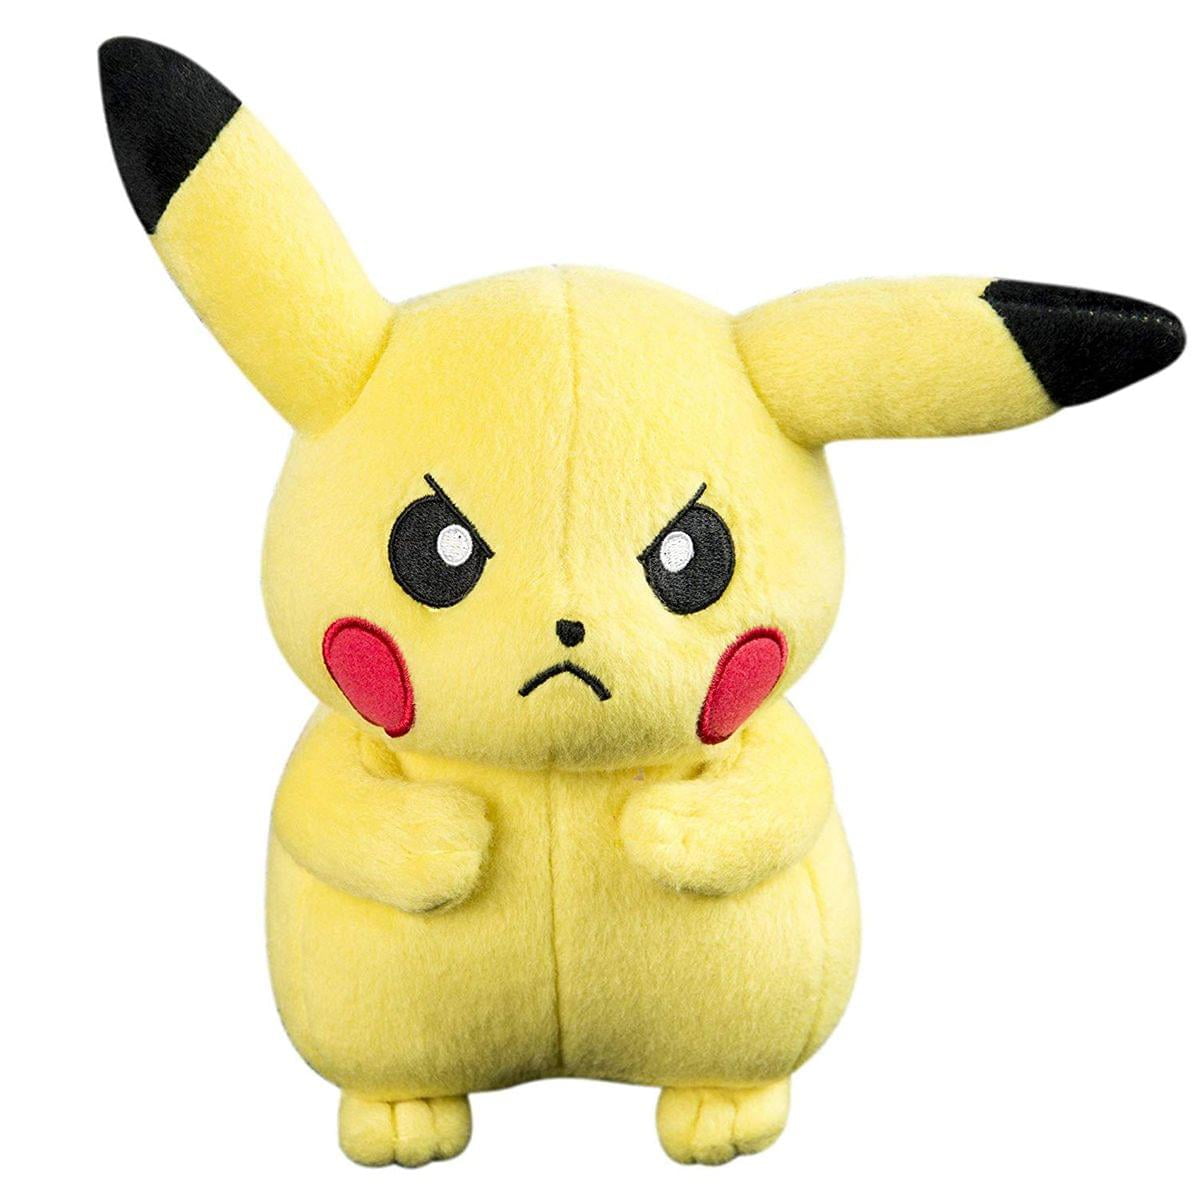 Mewtwo Peluche Plush Toys Pokemon Pikachu Peluche Stuffed Doll